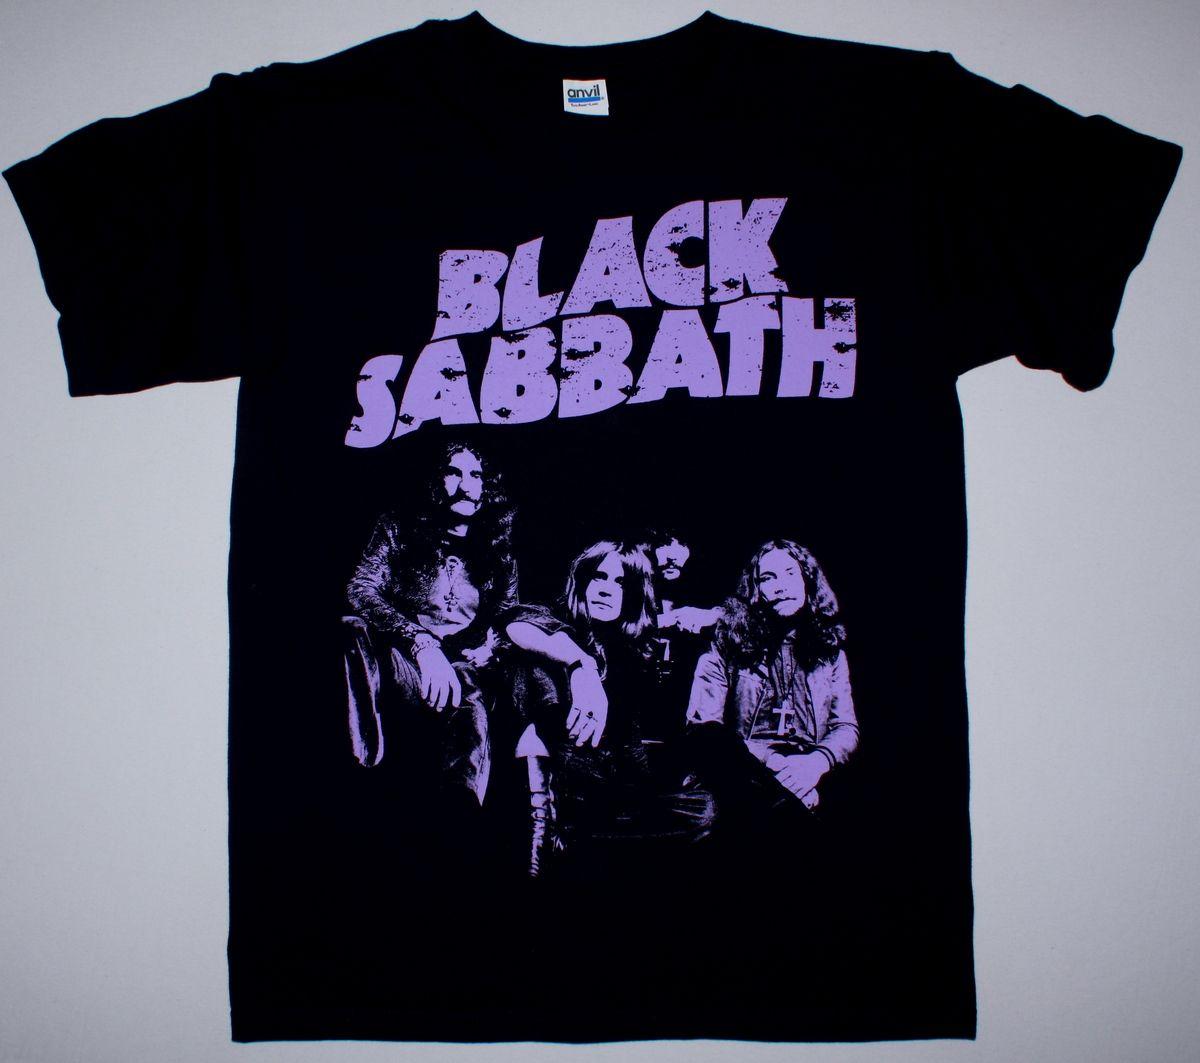 Black Sabbath Band Logo - LogoDix